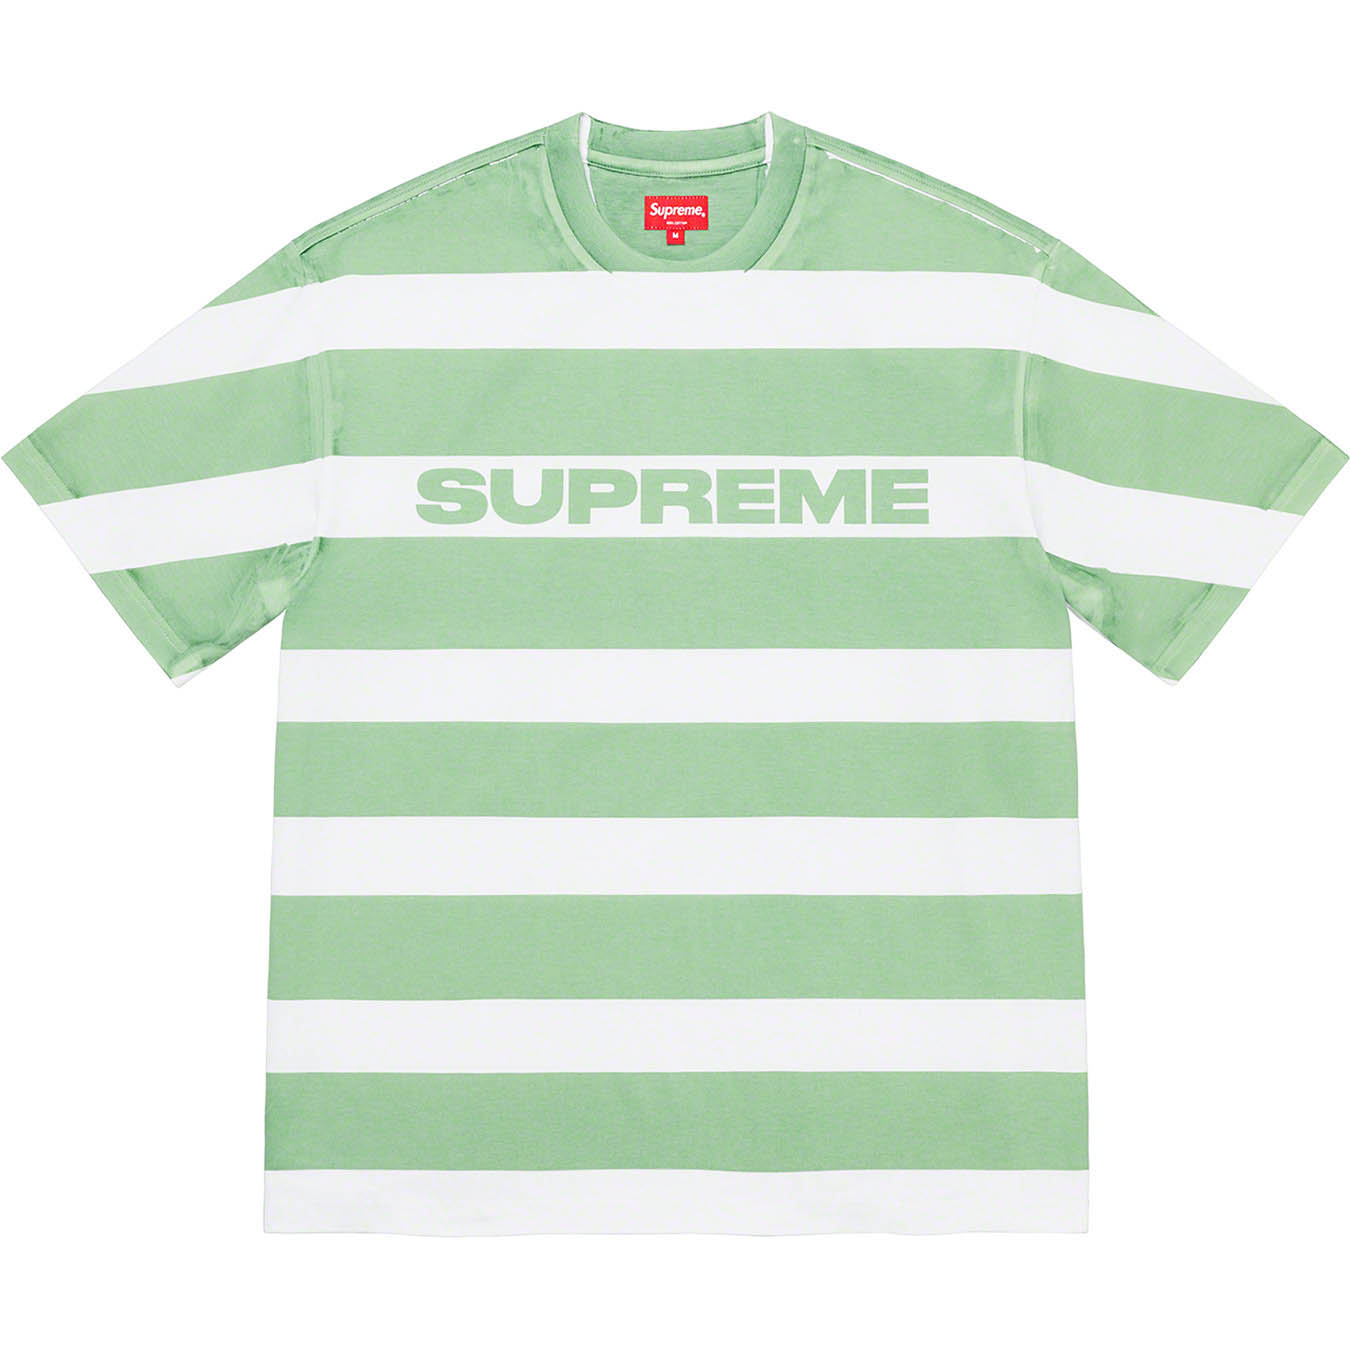 Supreme Printed Stripe S/S Top